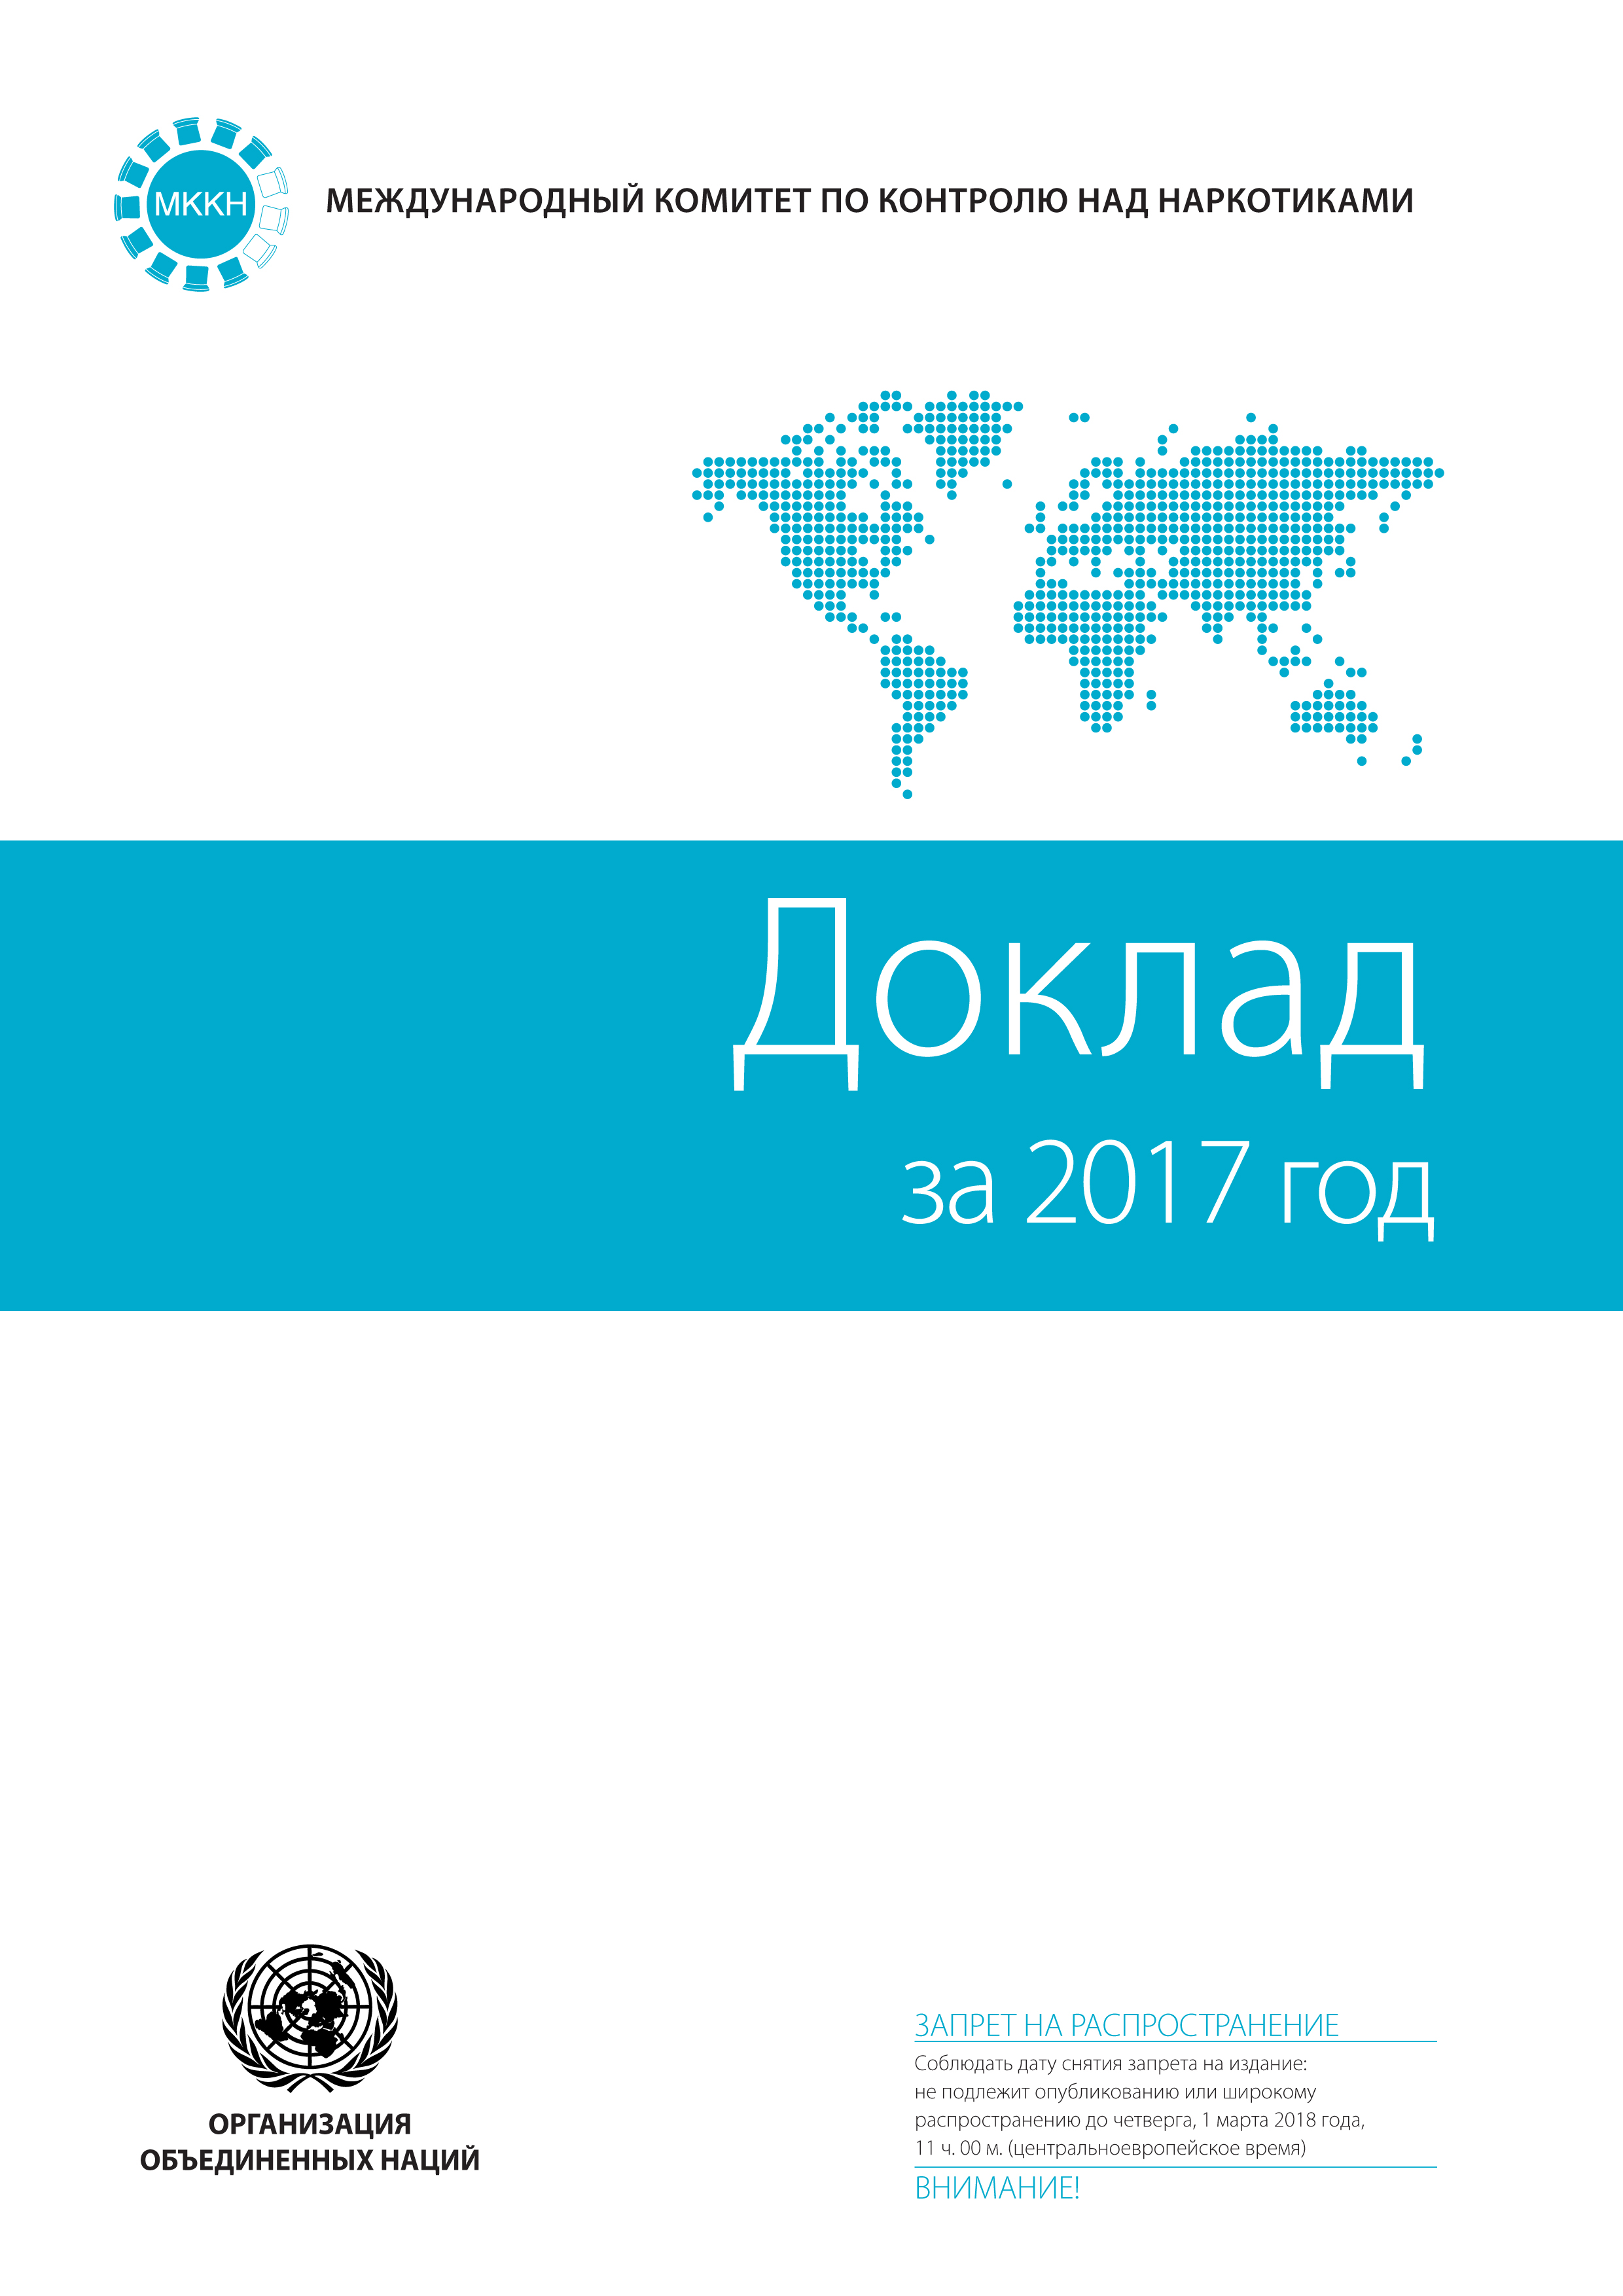 image of Доклад международного комитета по контролю над наркотиками за 2017 год